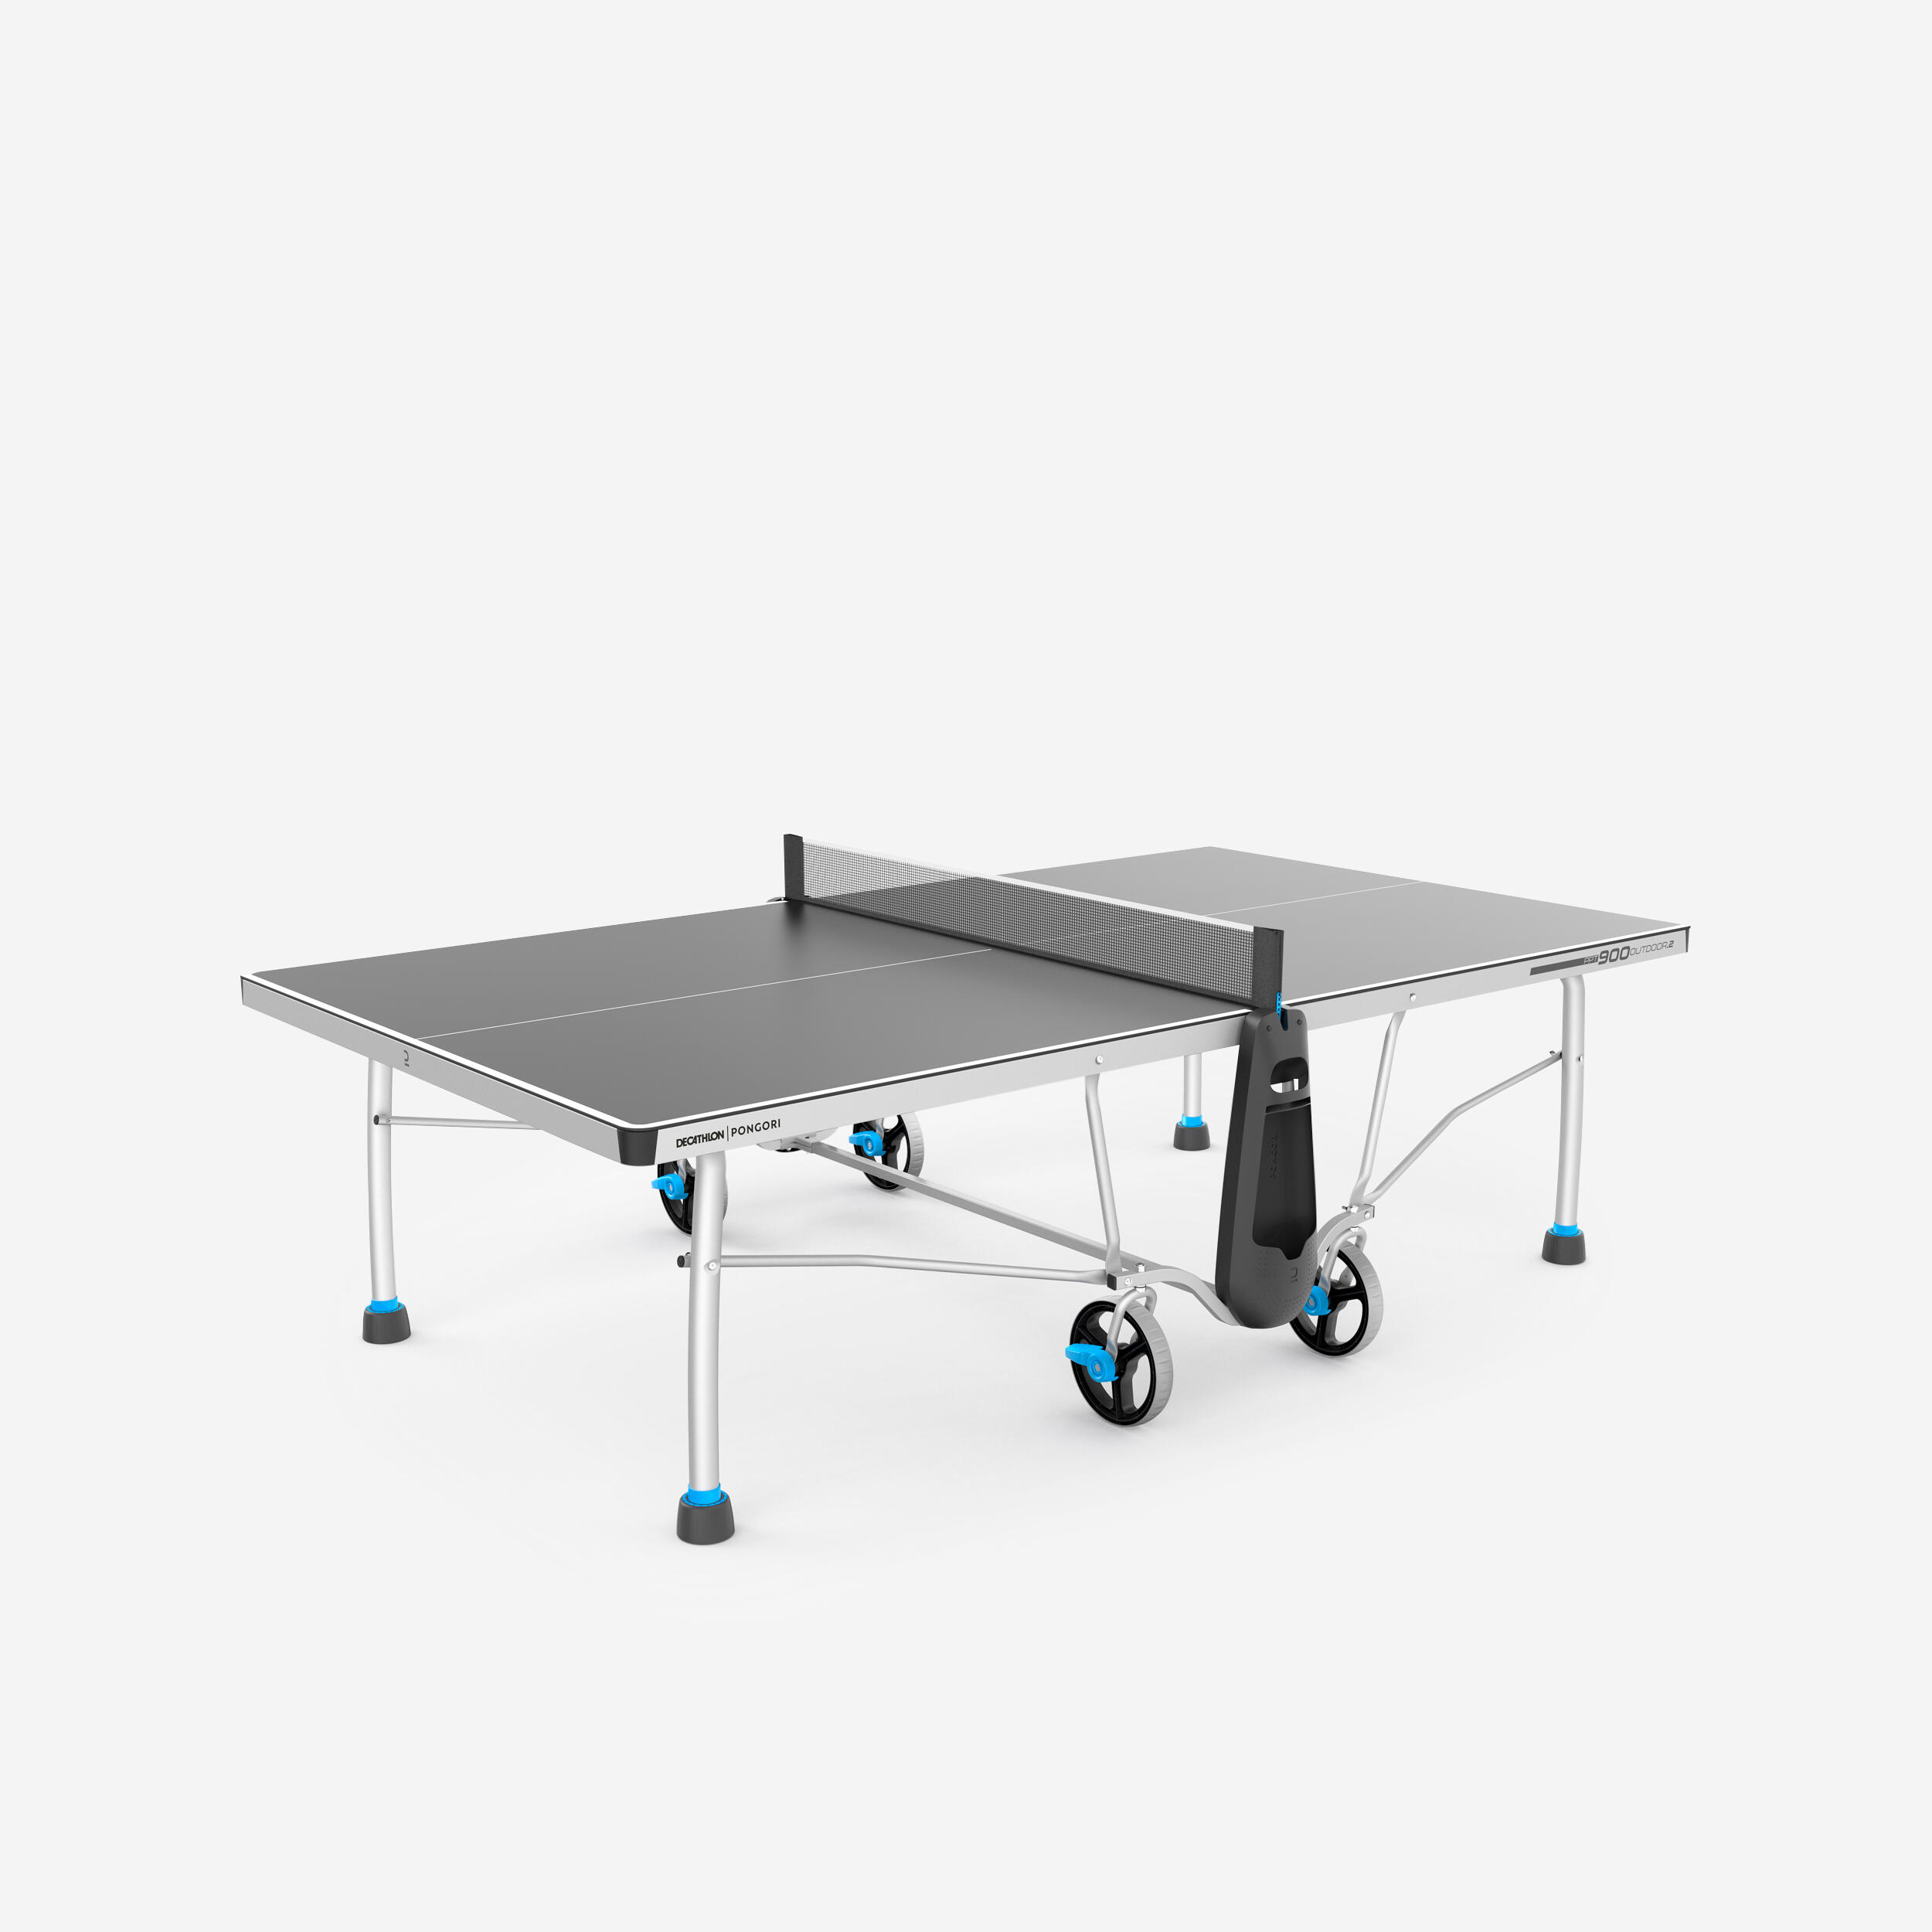 PONGORI Outdoor Table Tennis Table PPT 900.2 - Grey